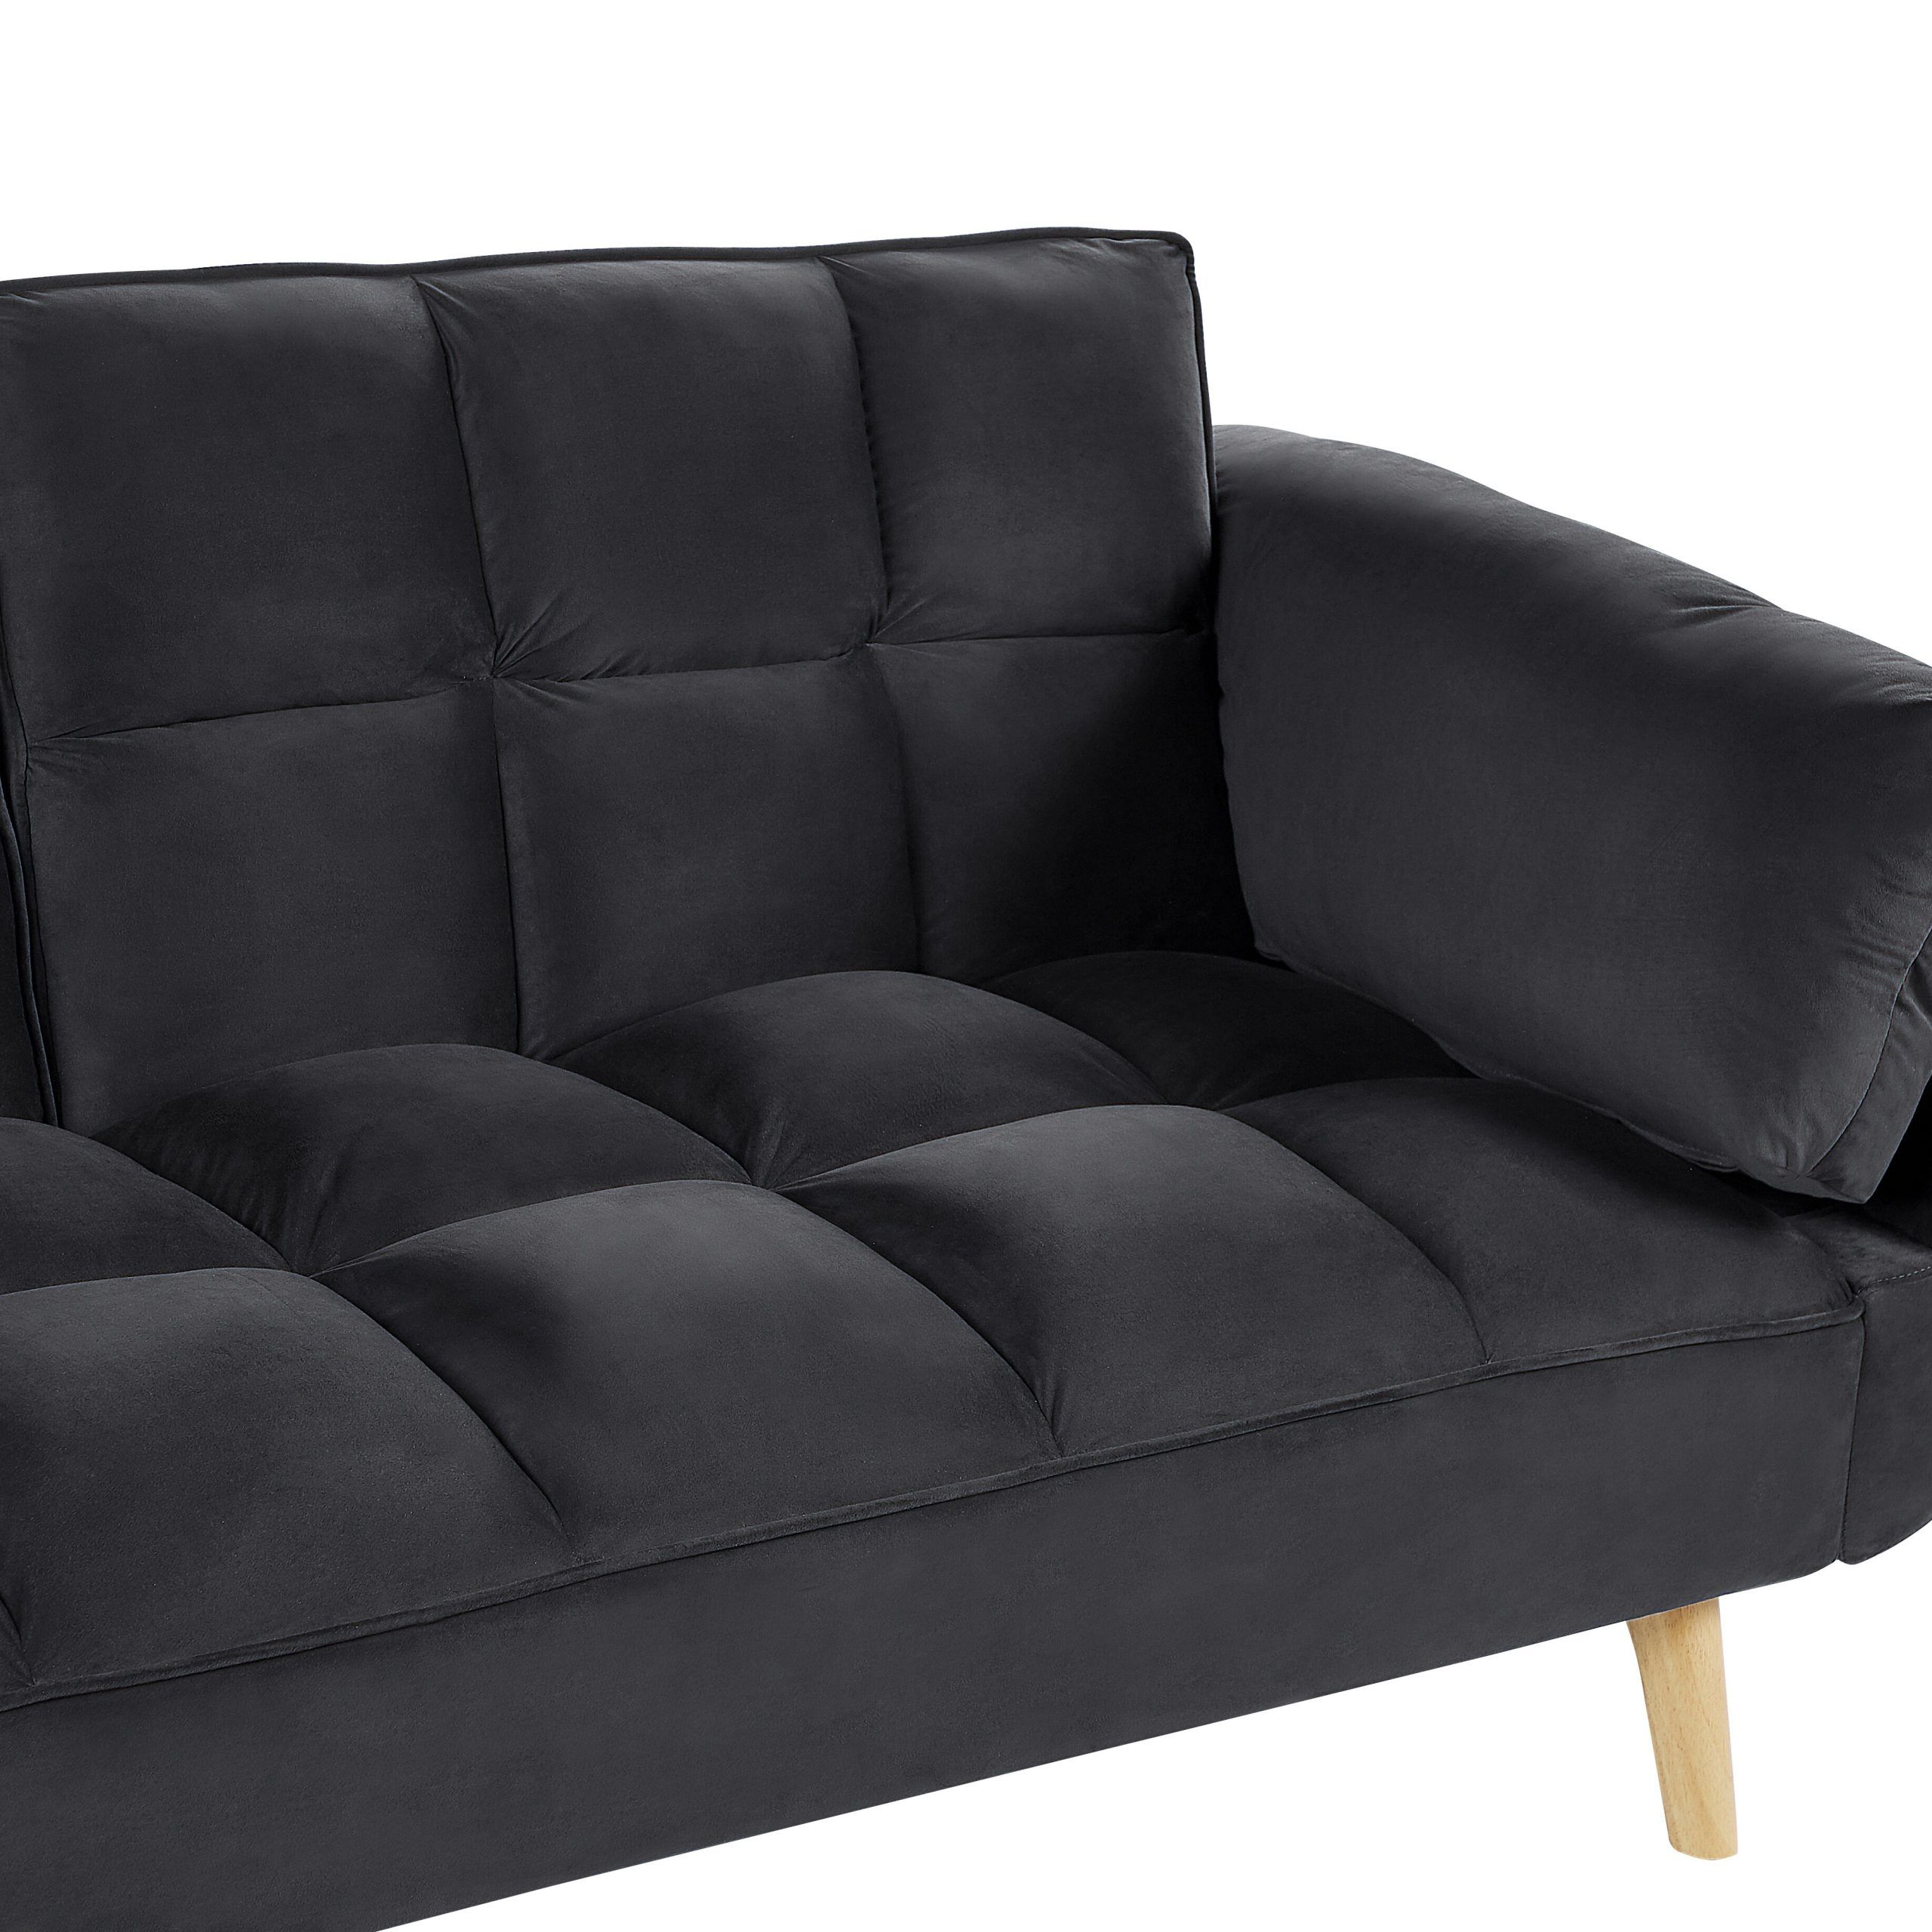 Velvet Sofa Bed Black Asby | Beliani (View 15 of 20)